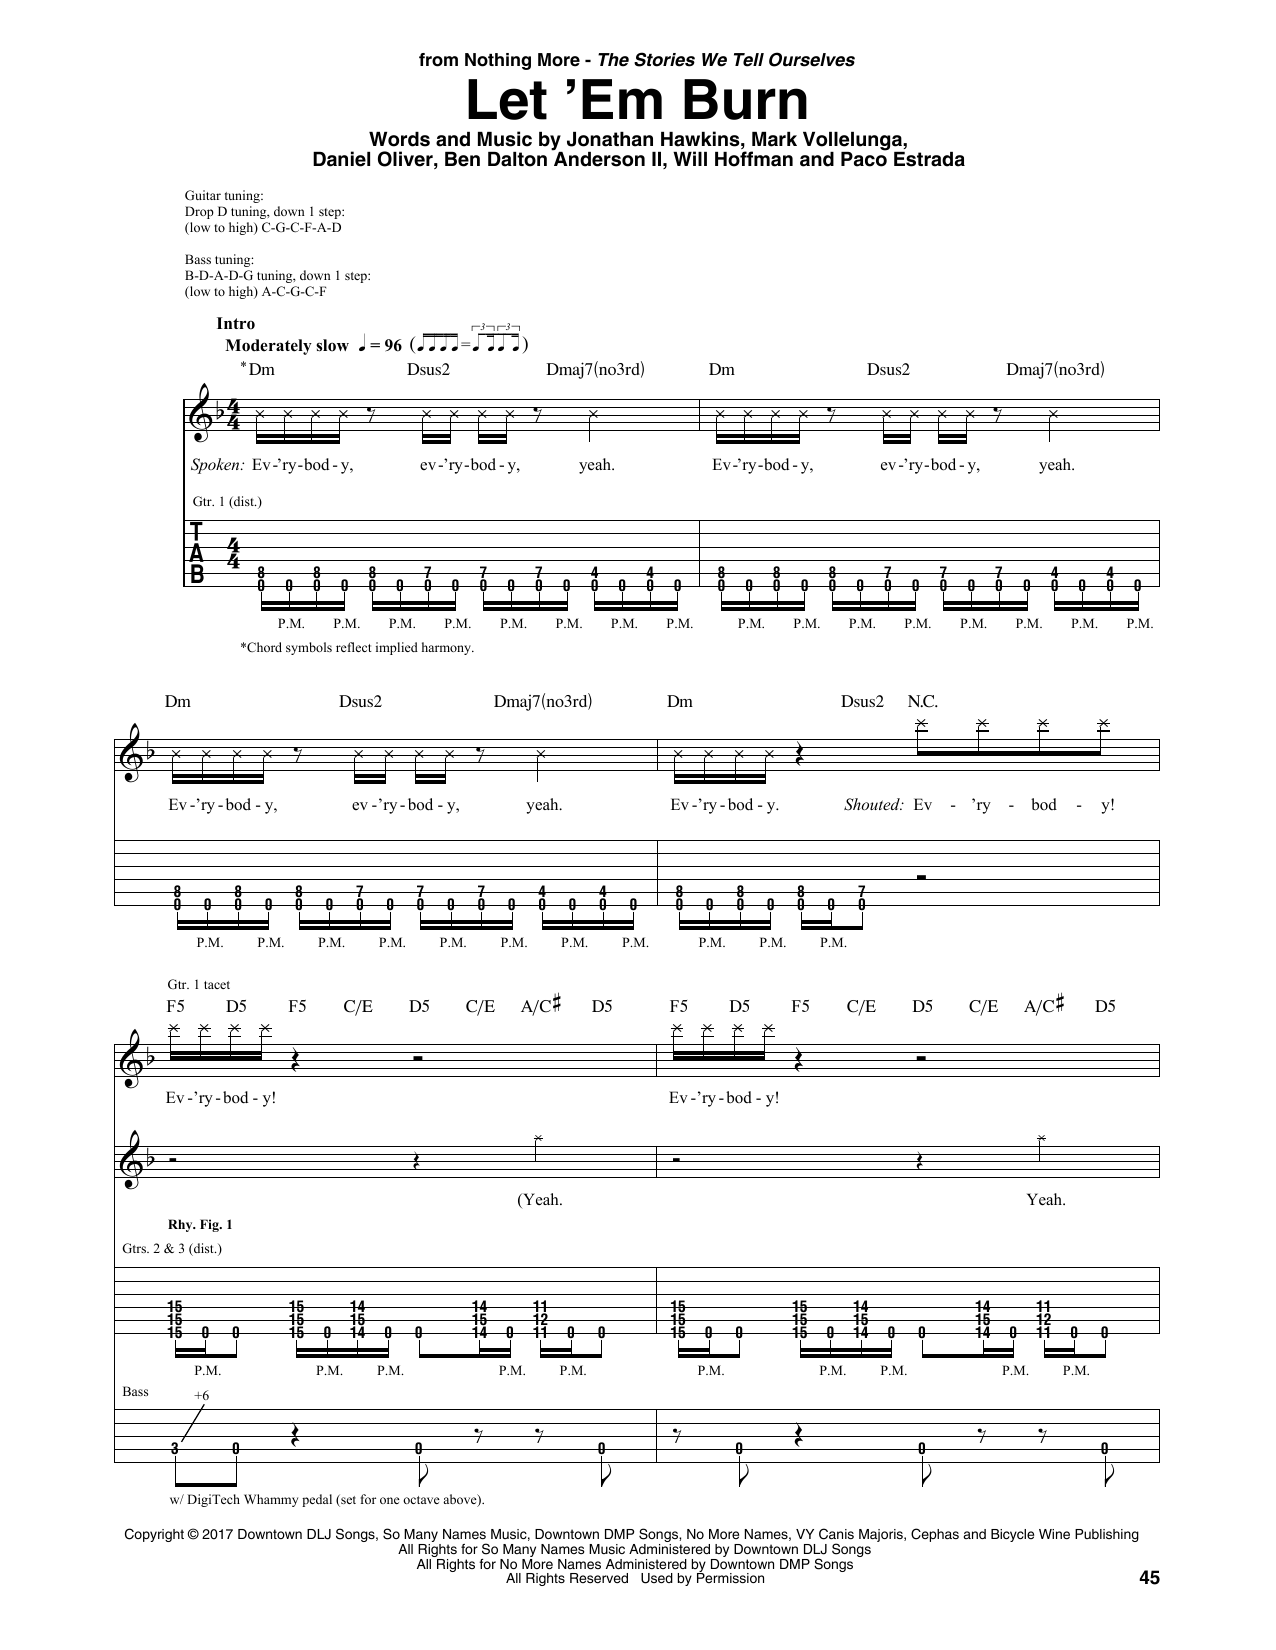 Nothing More Let 'Em Burn Sheet Music Notes & Chords for Guitar Rhythm Tab - Download or Print PDF